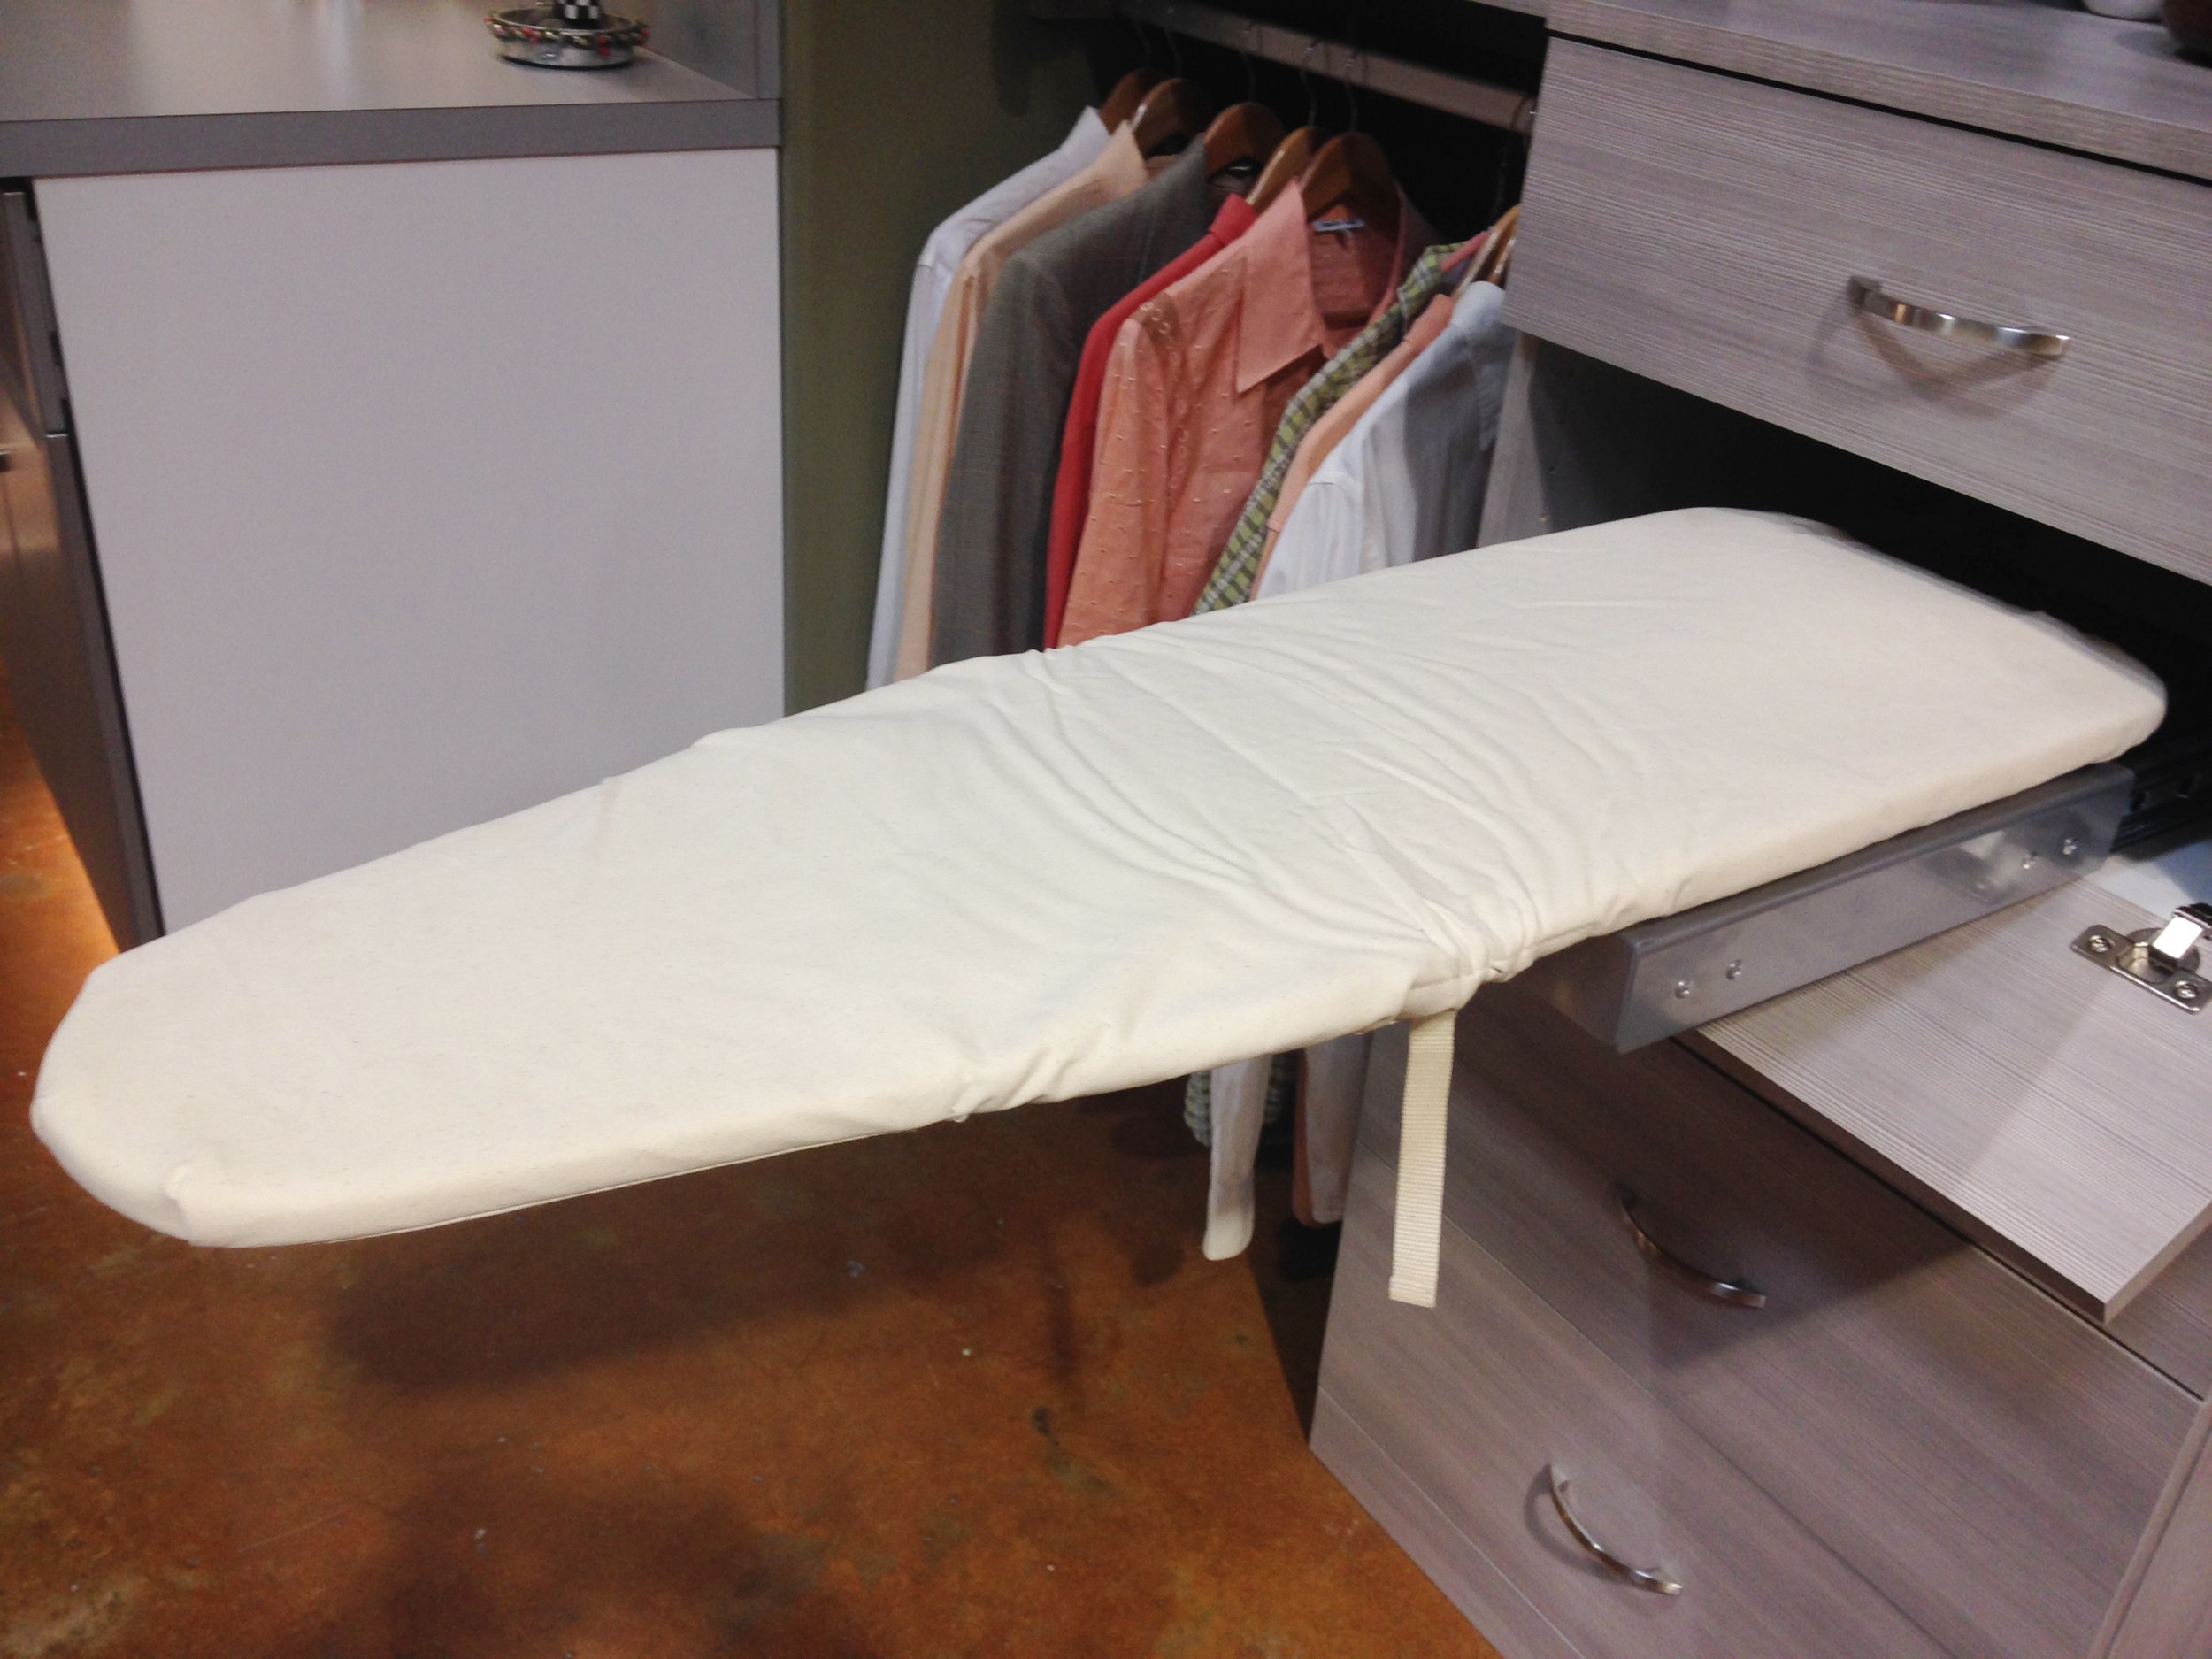 Stowaway pull-down ironing board